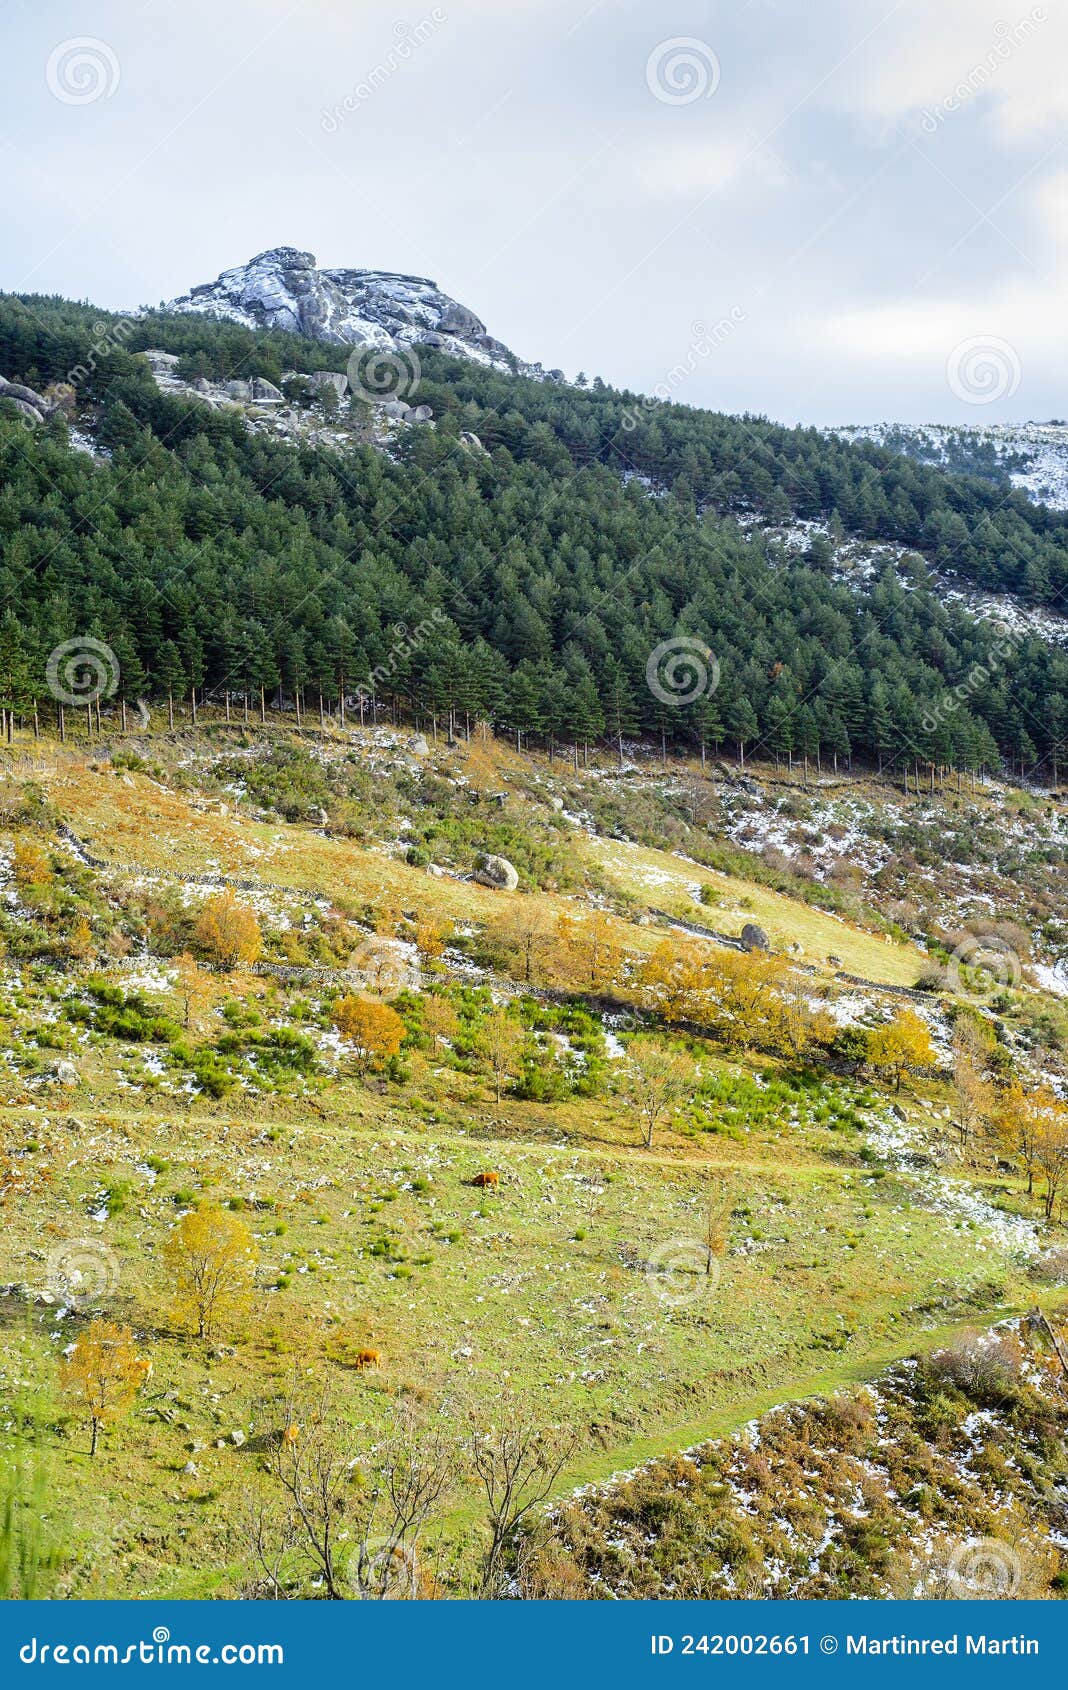 snowy mountain of hervas in autumn, extremadura